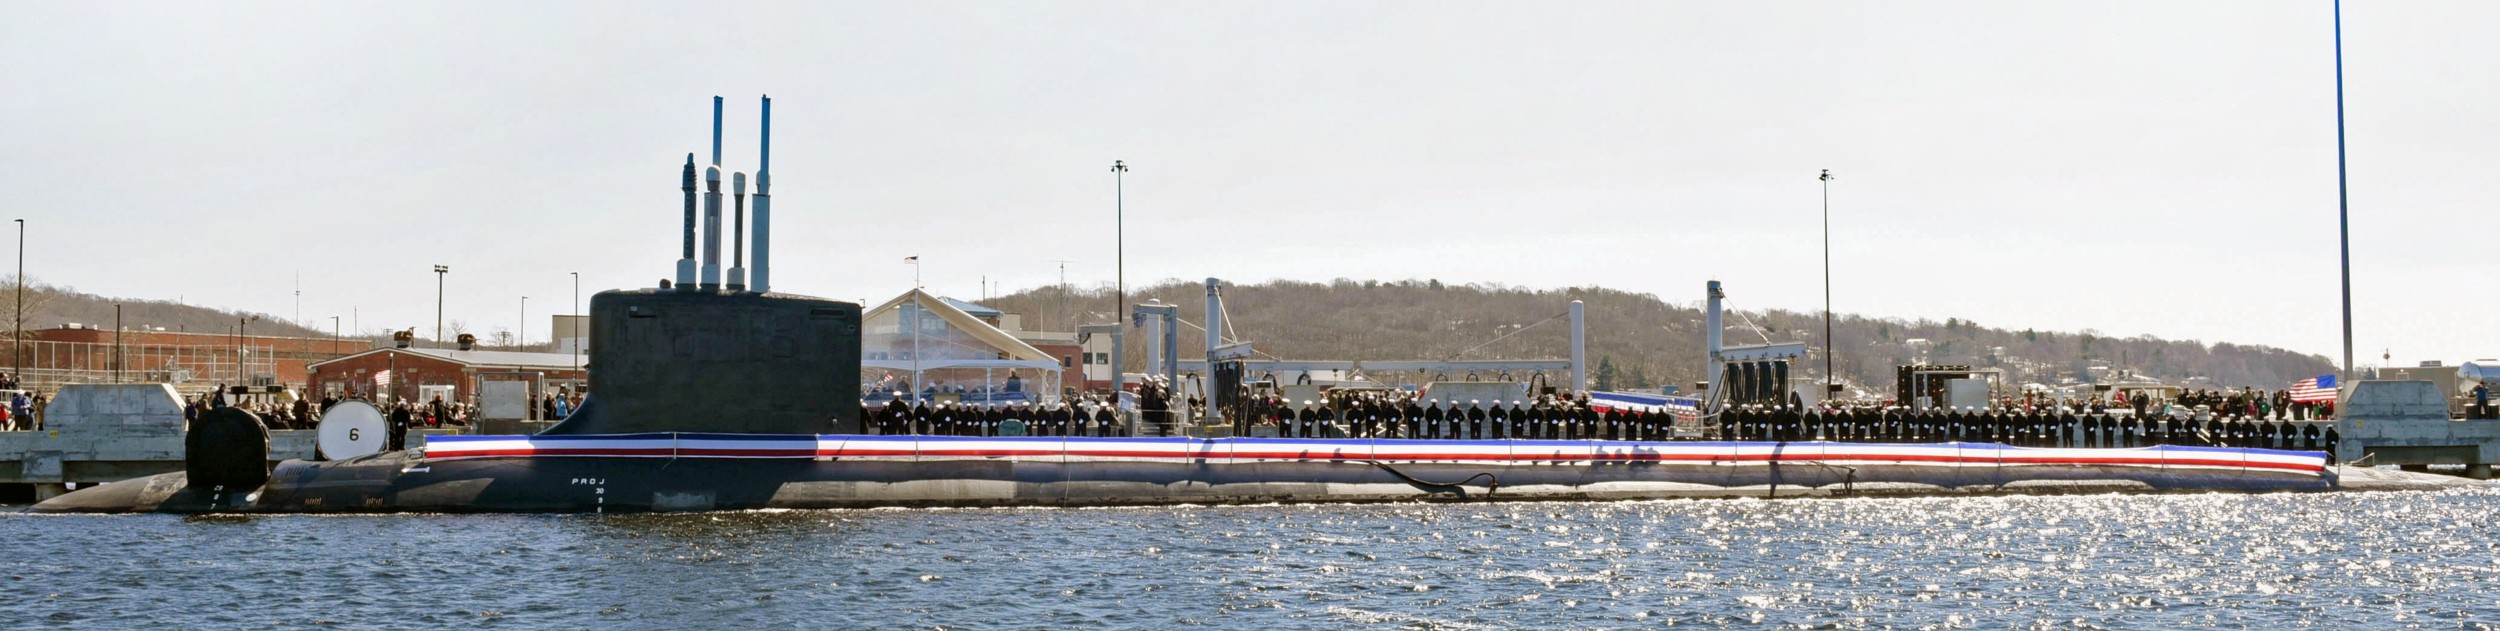 ssn-788 uss colorado virginia class attack submarine us navy 26